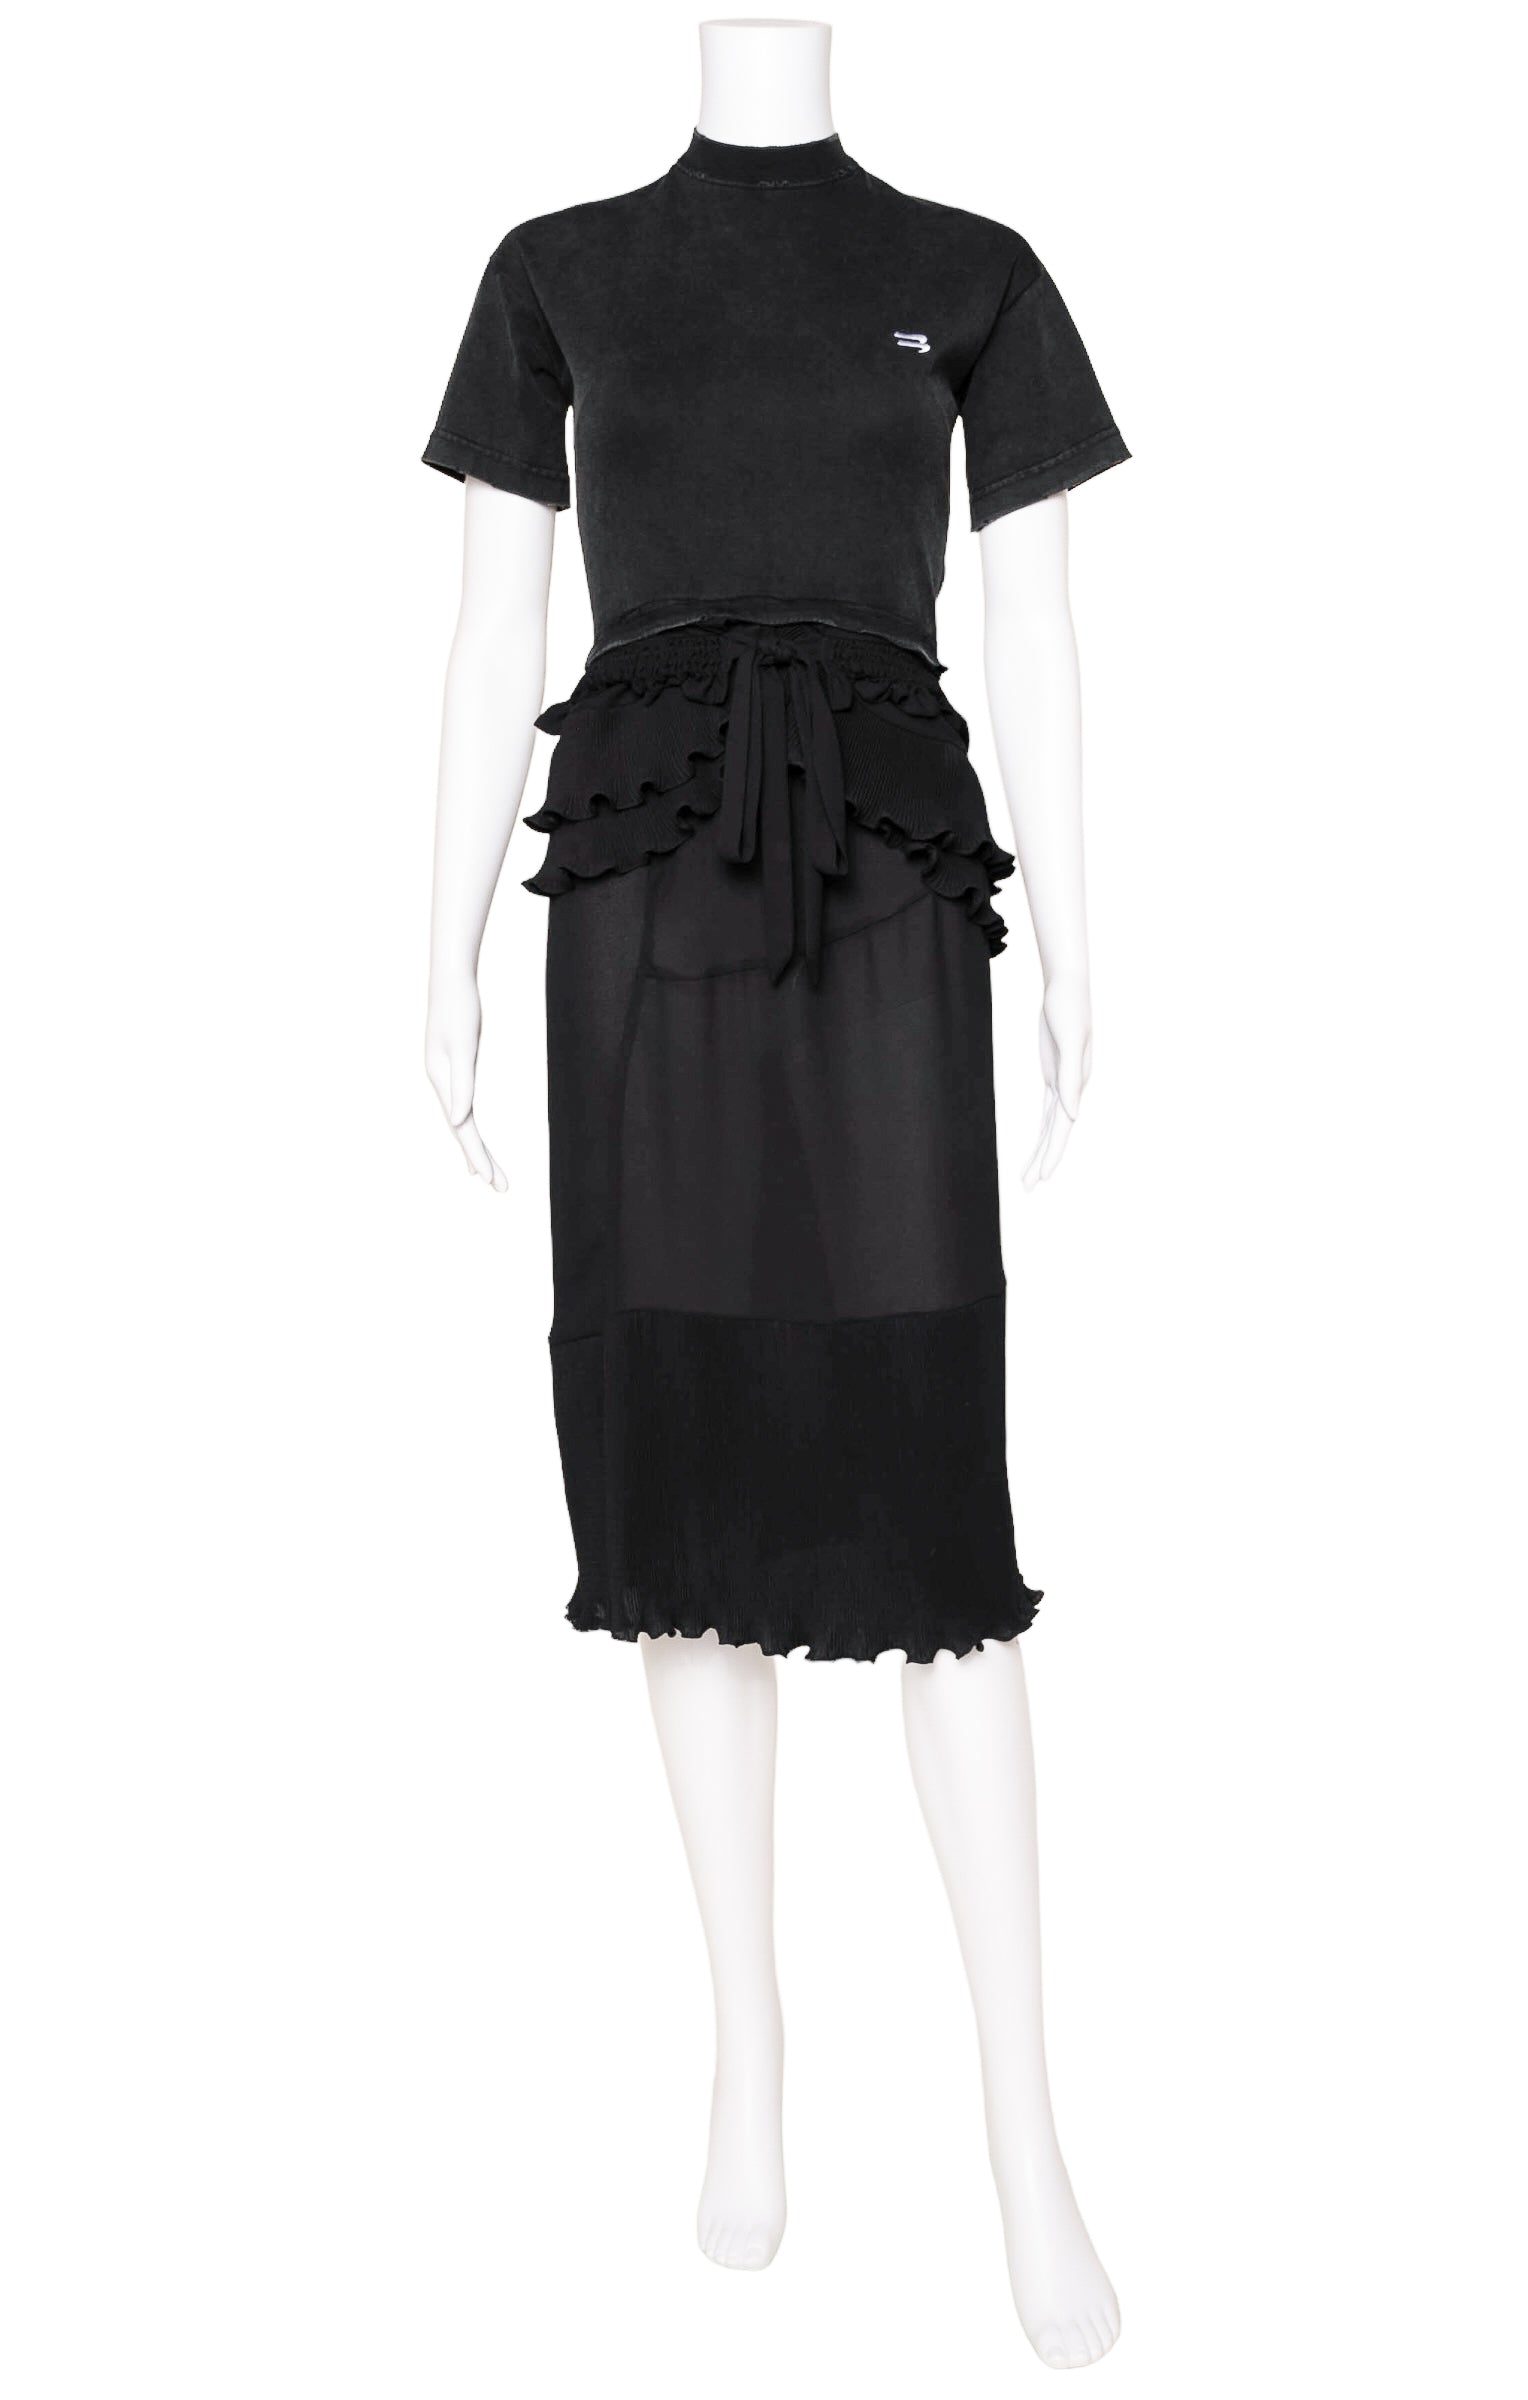 BALENCIAGA (RARE) Dress Size: No size tags, fits like XS